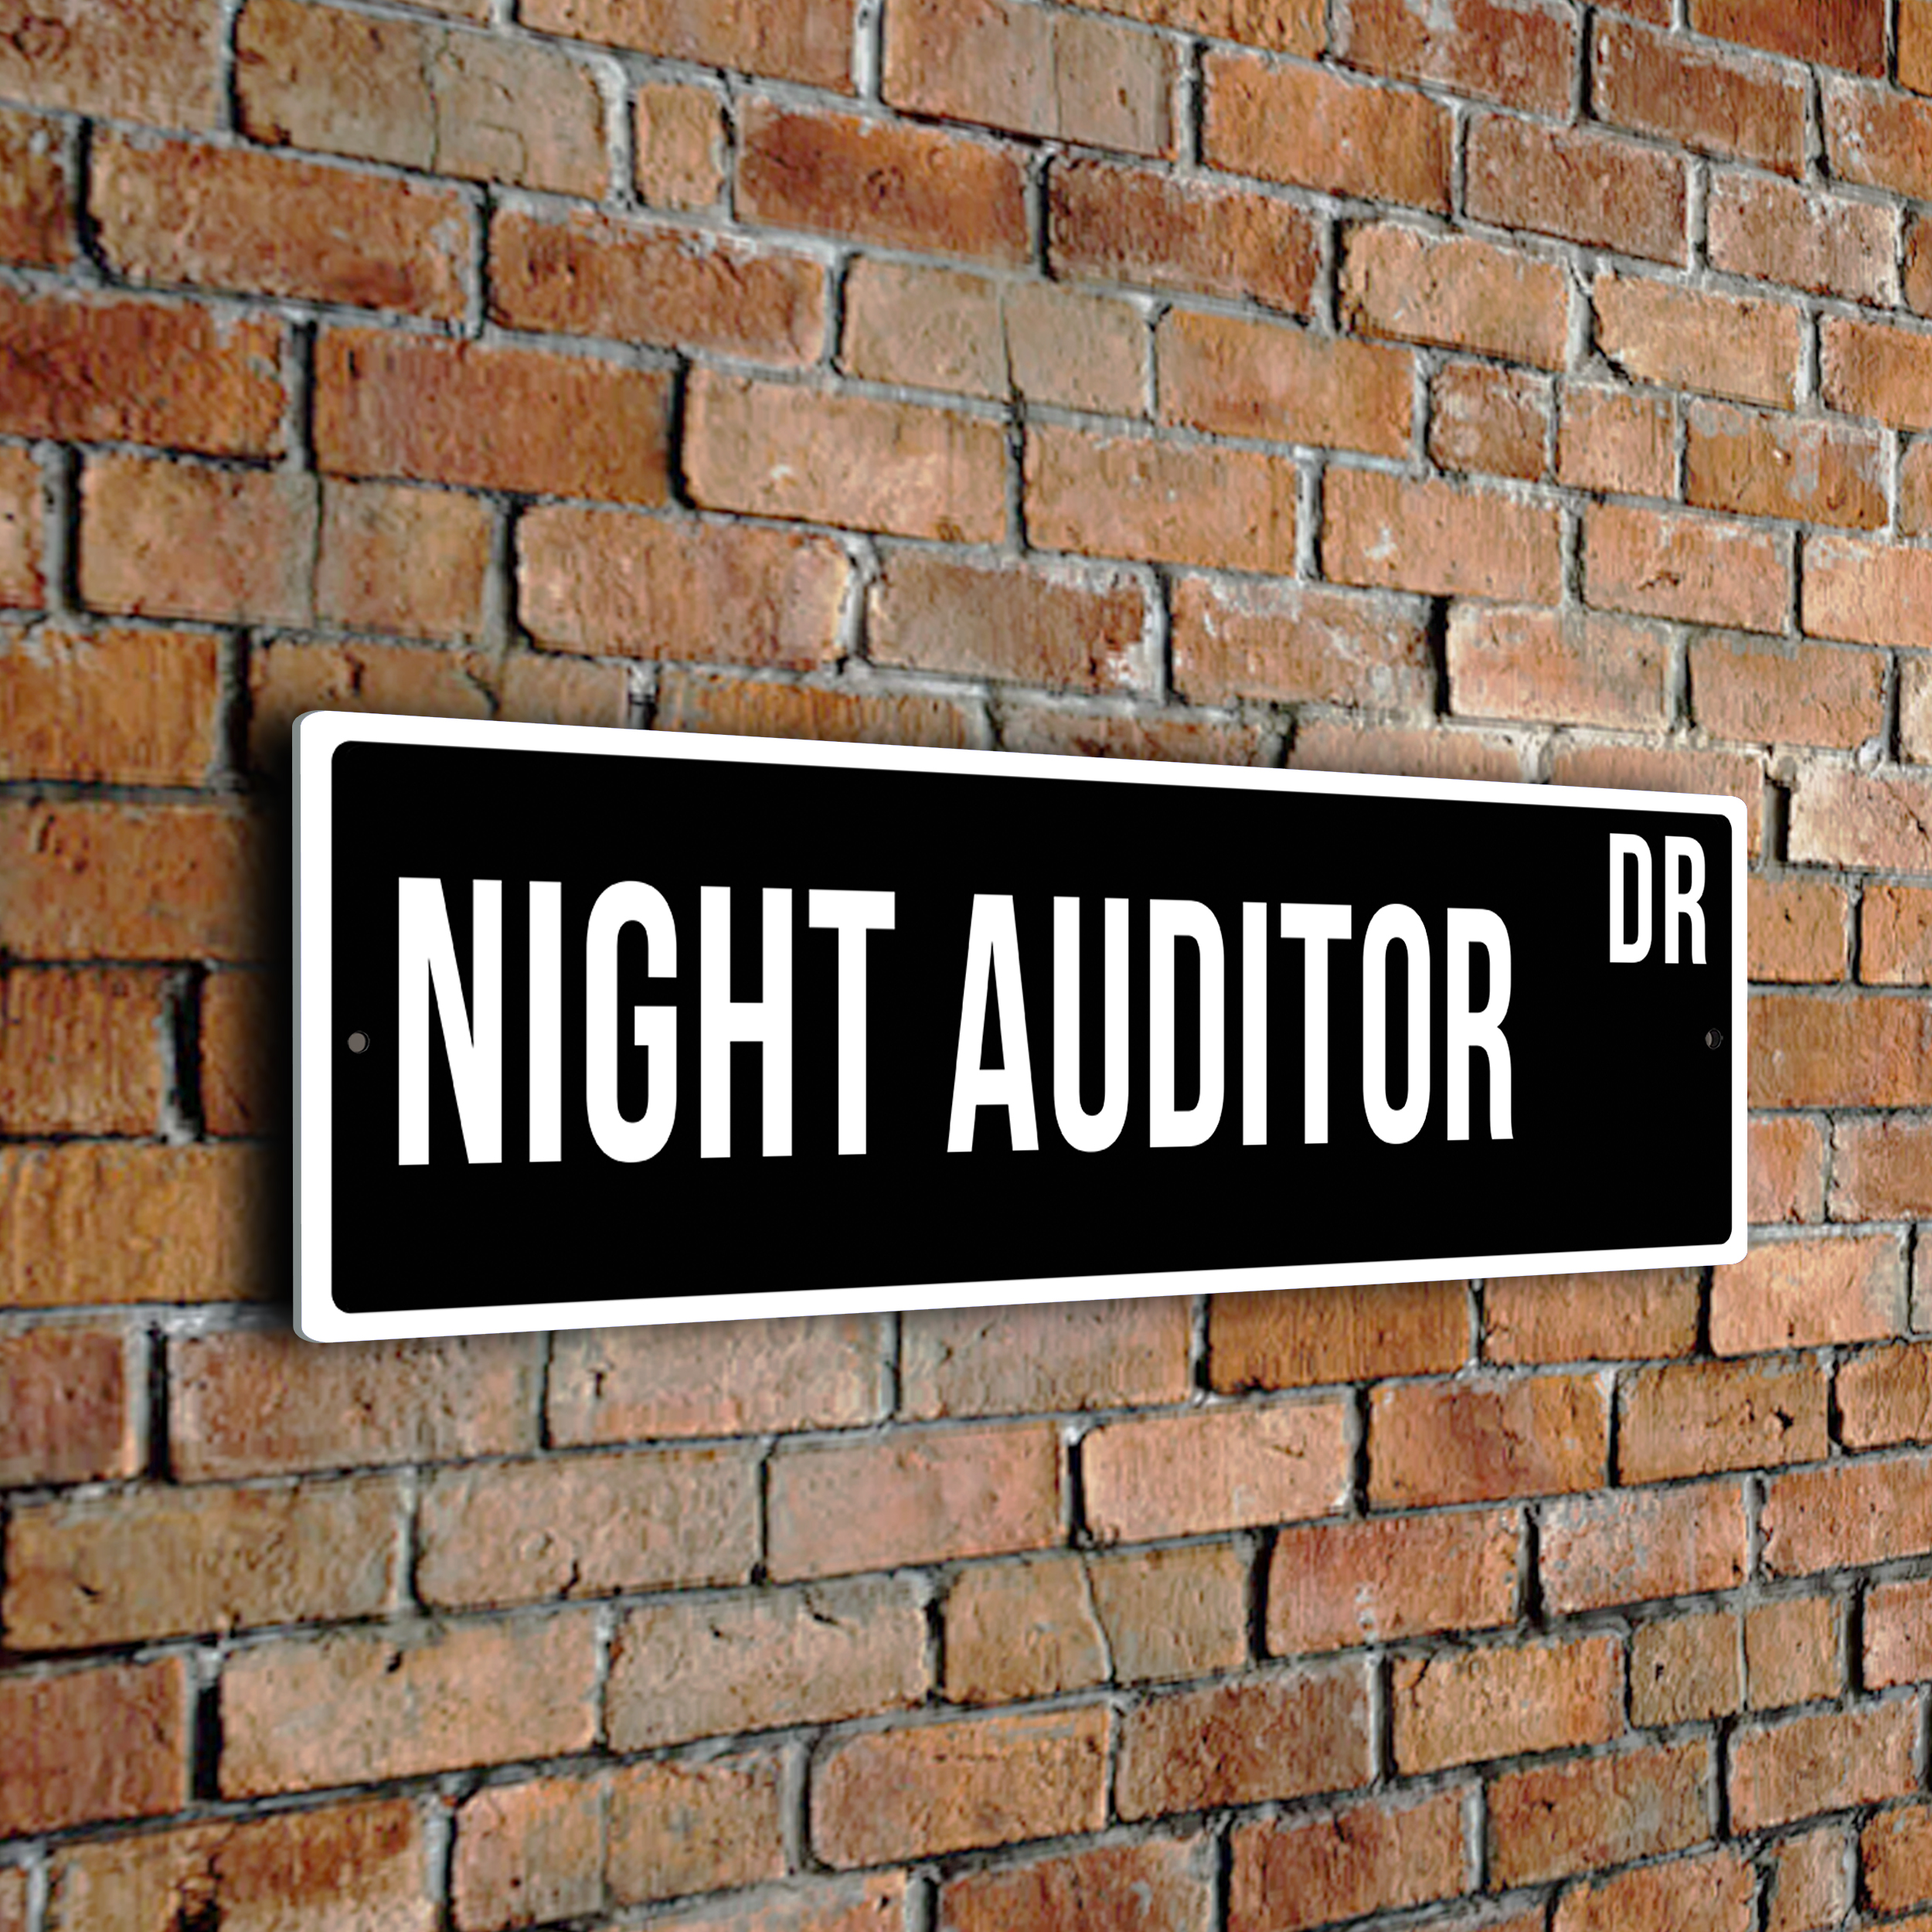 Night Auditor street sign